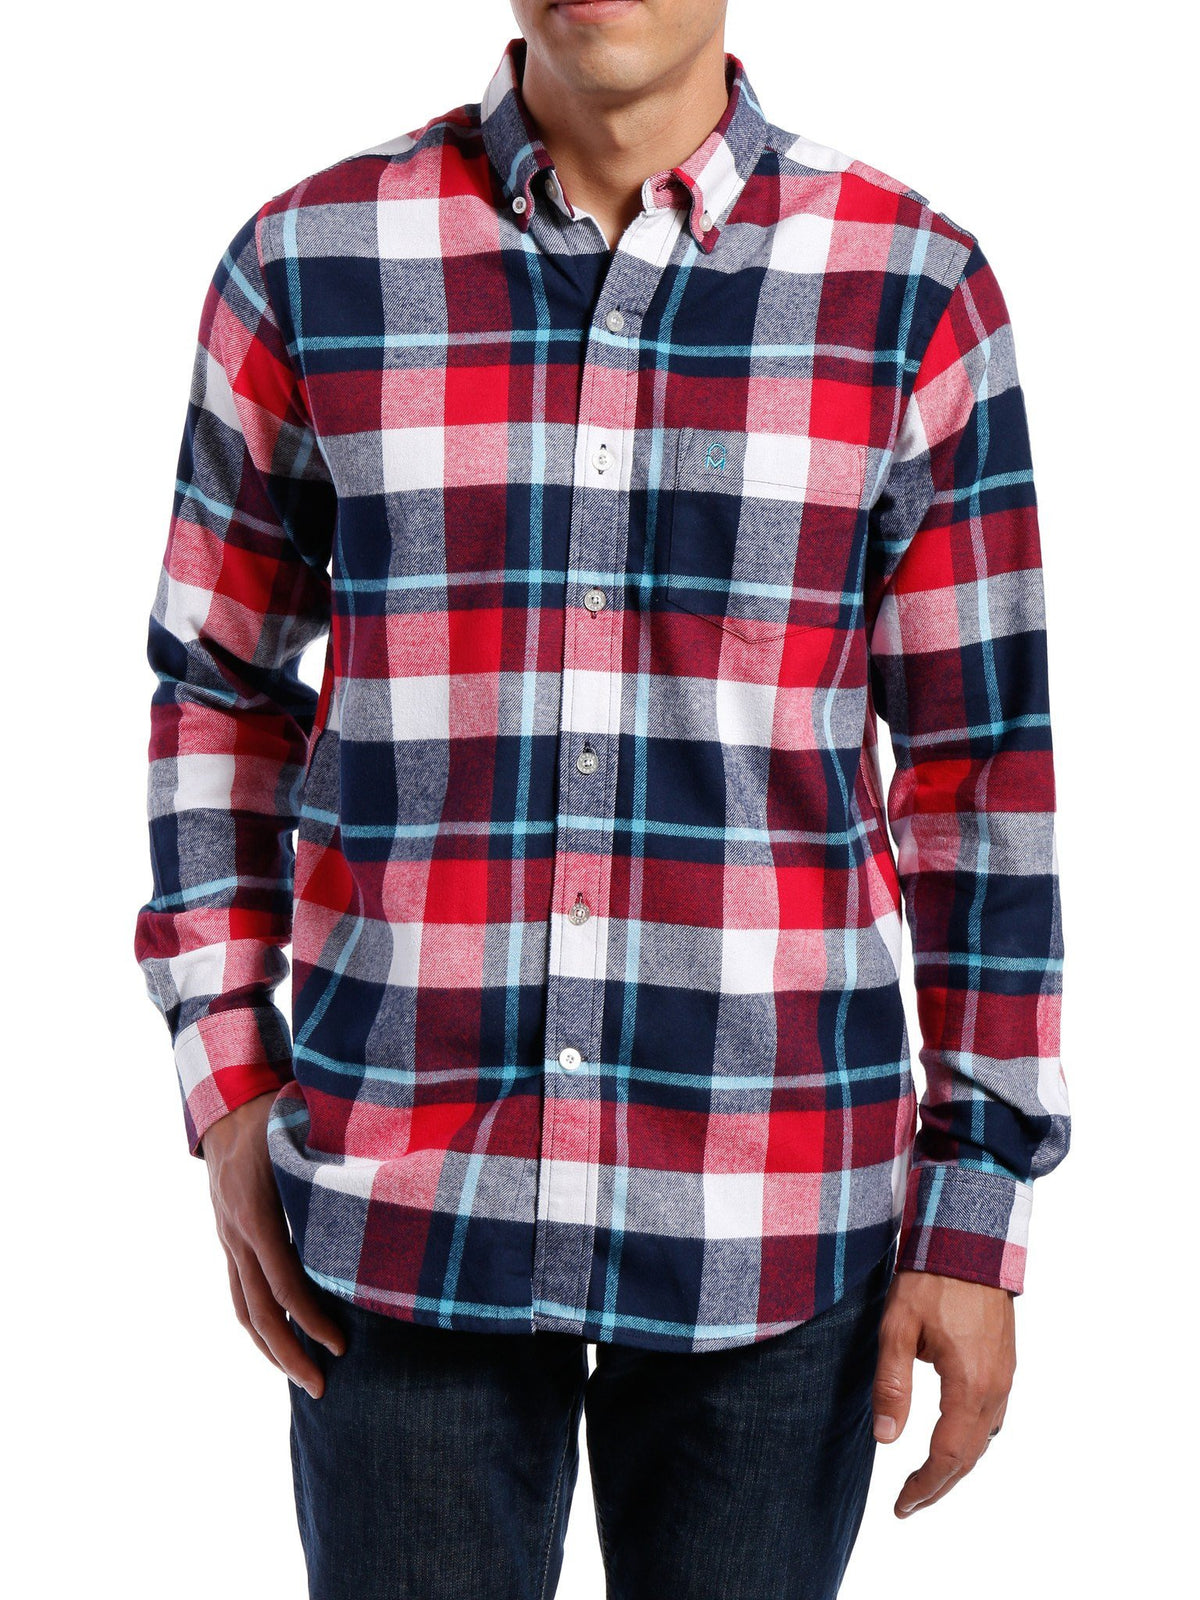 Mens 100% Cotton Flannel Shirt - Regular Fit - Red-White-Blue Plaid